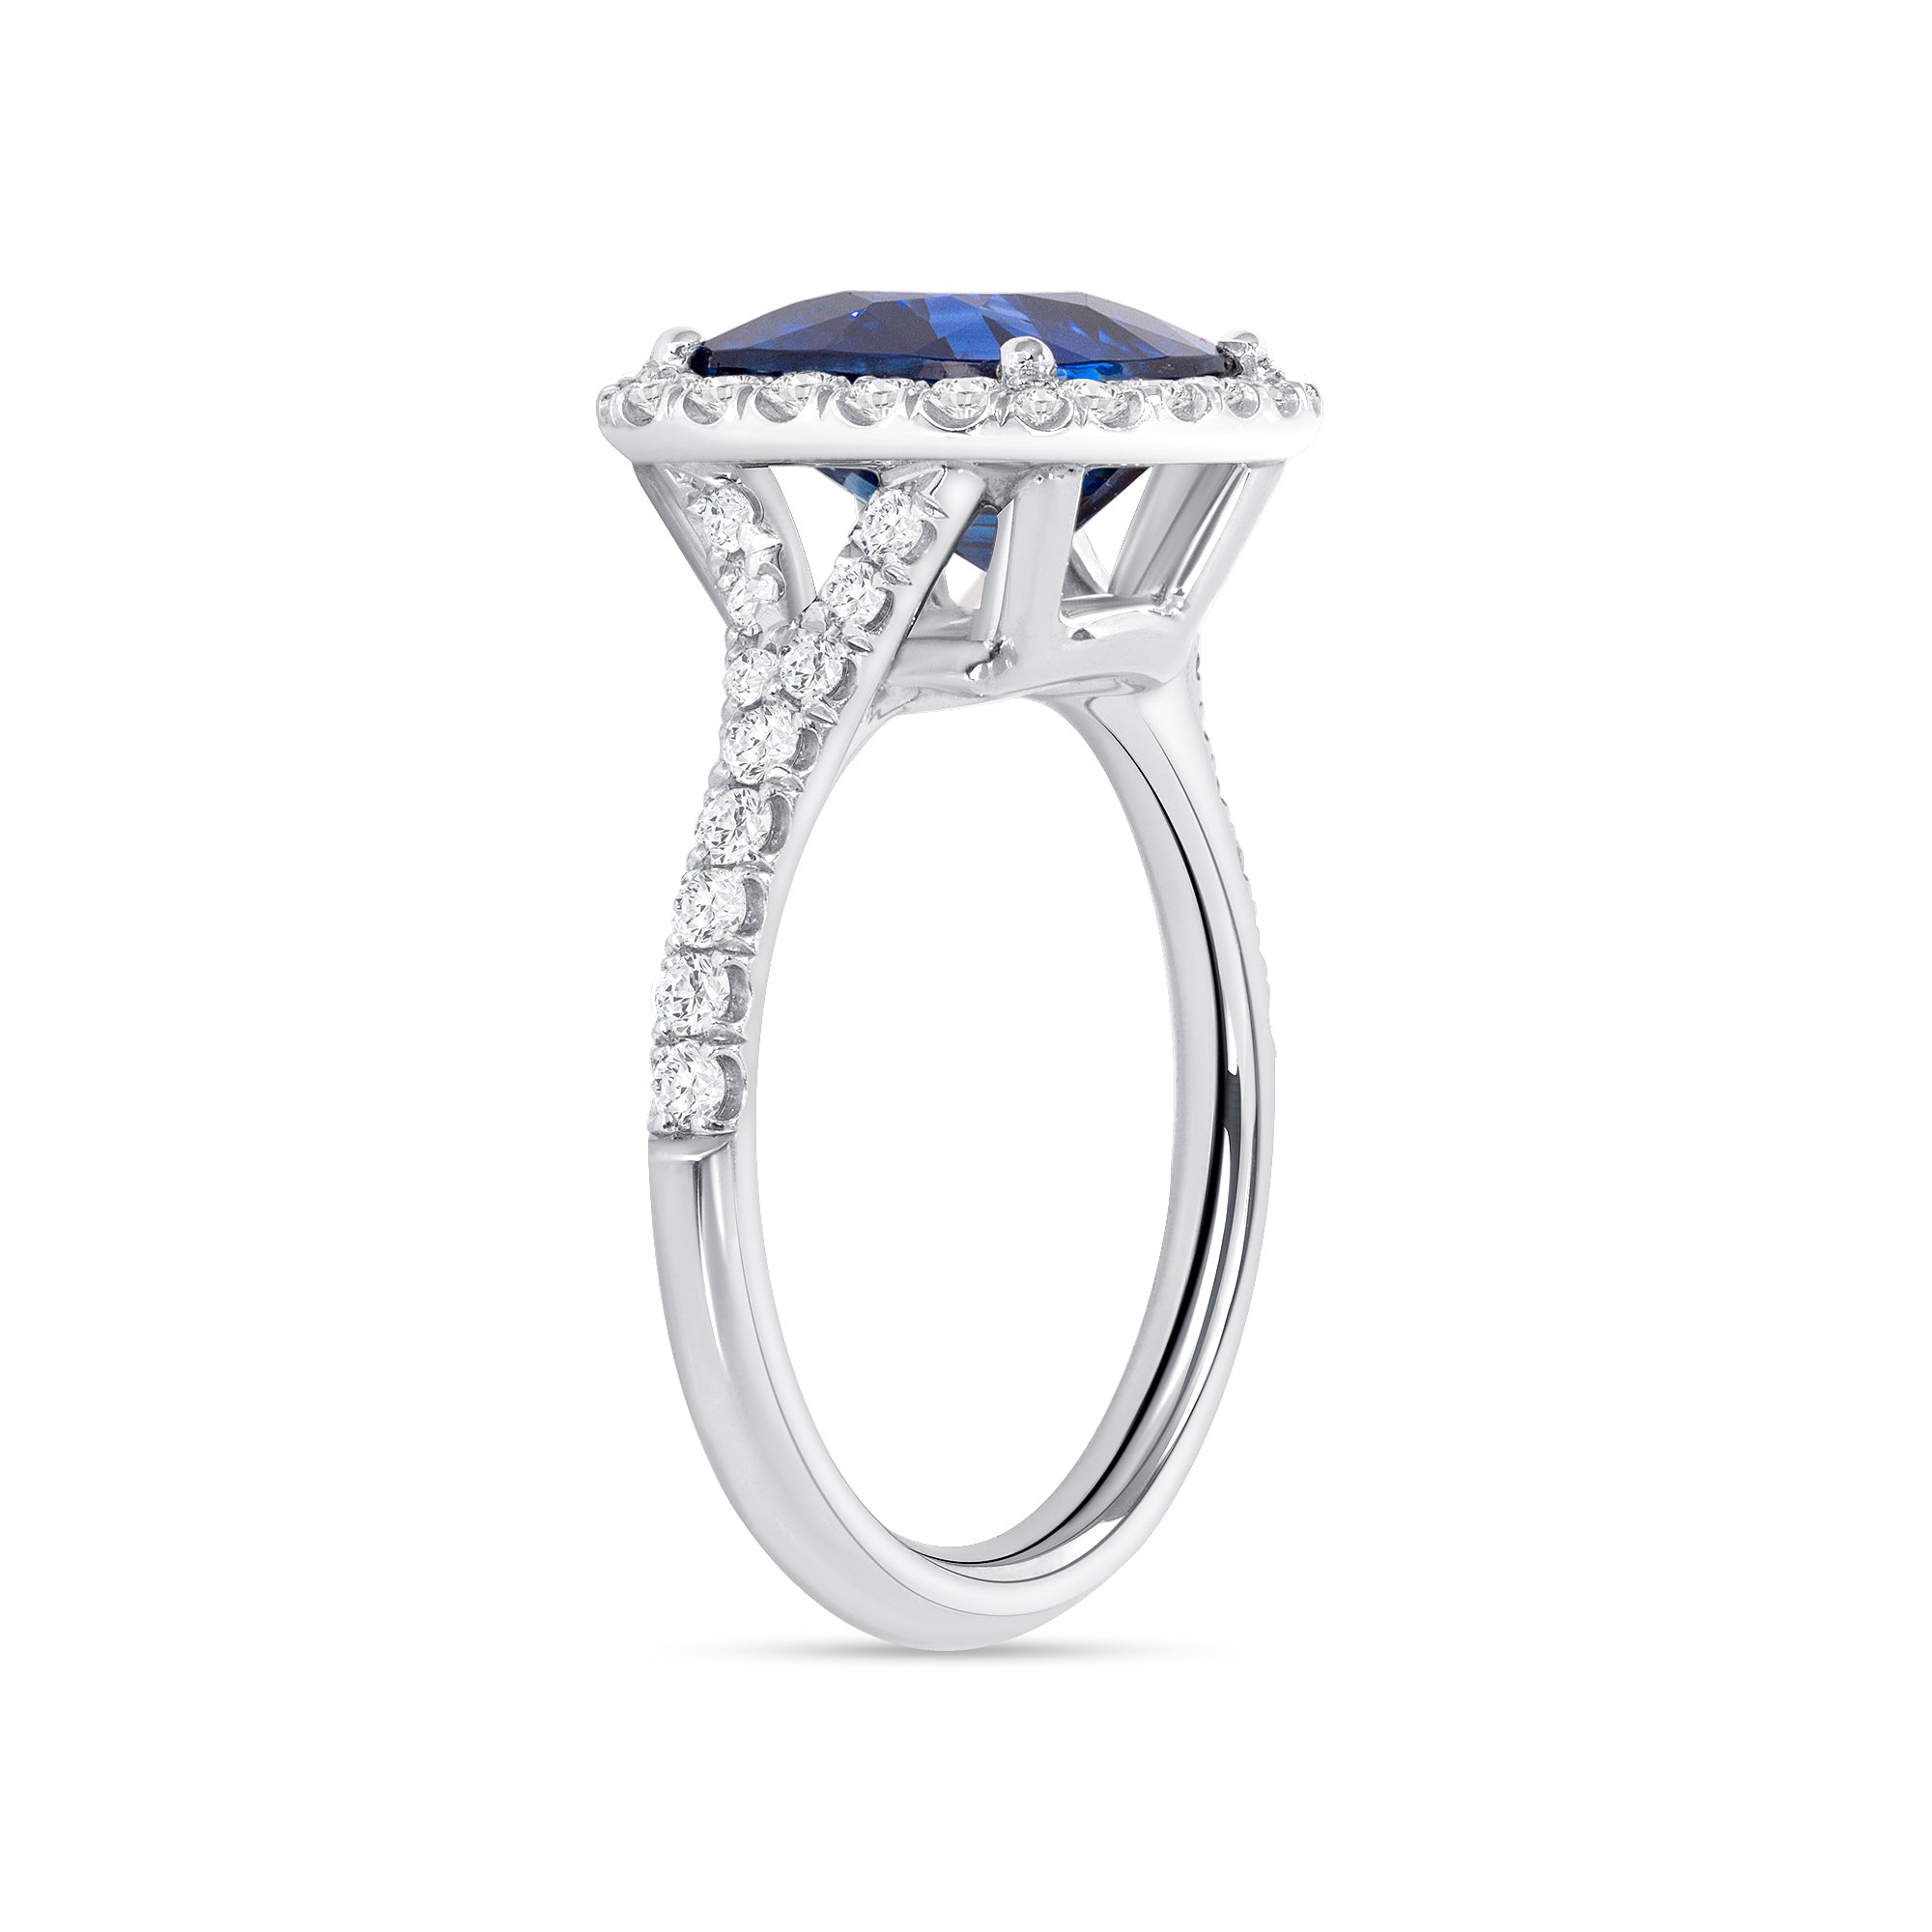 Cushion Cut Blue Sapphire Diamond Halo Ring In Platinum